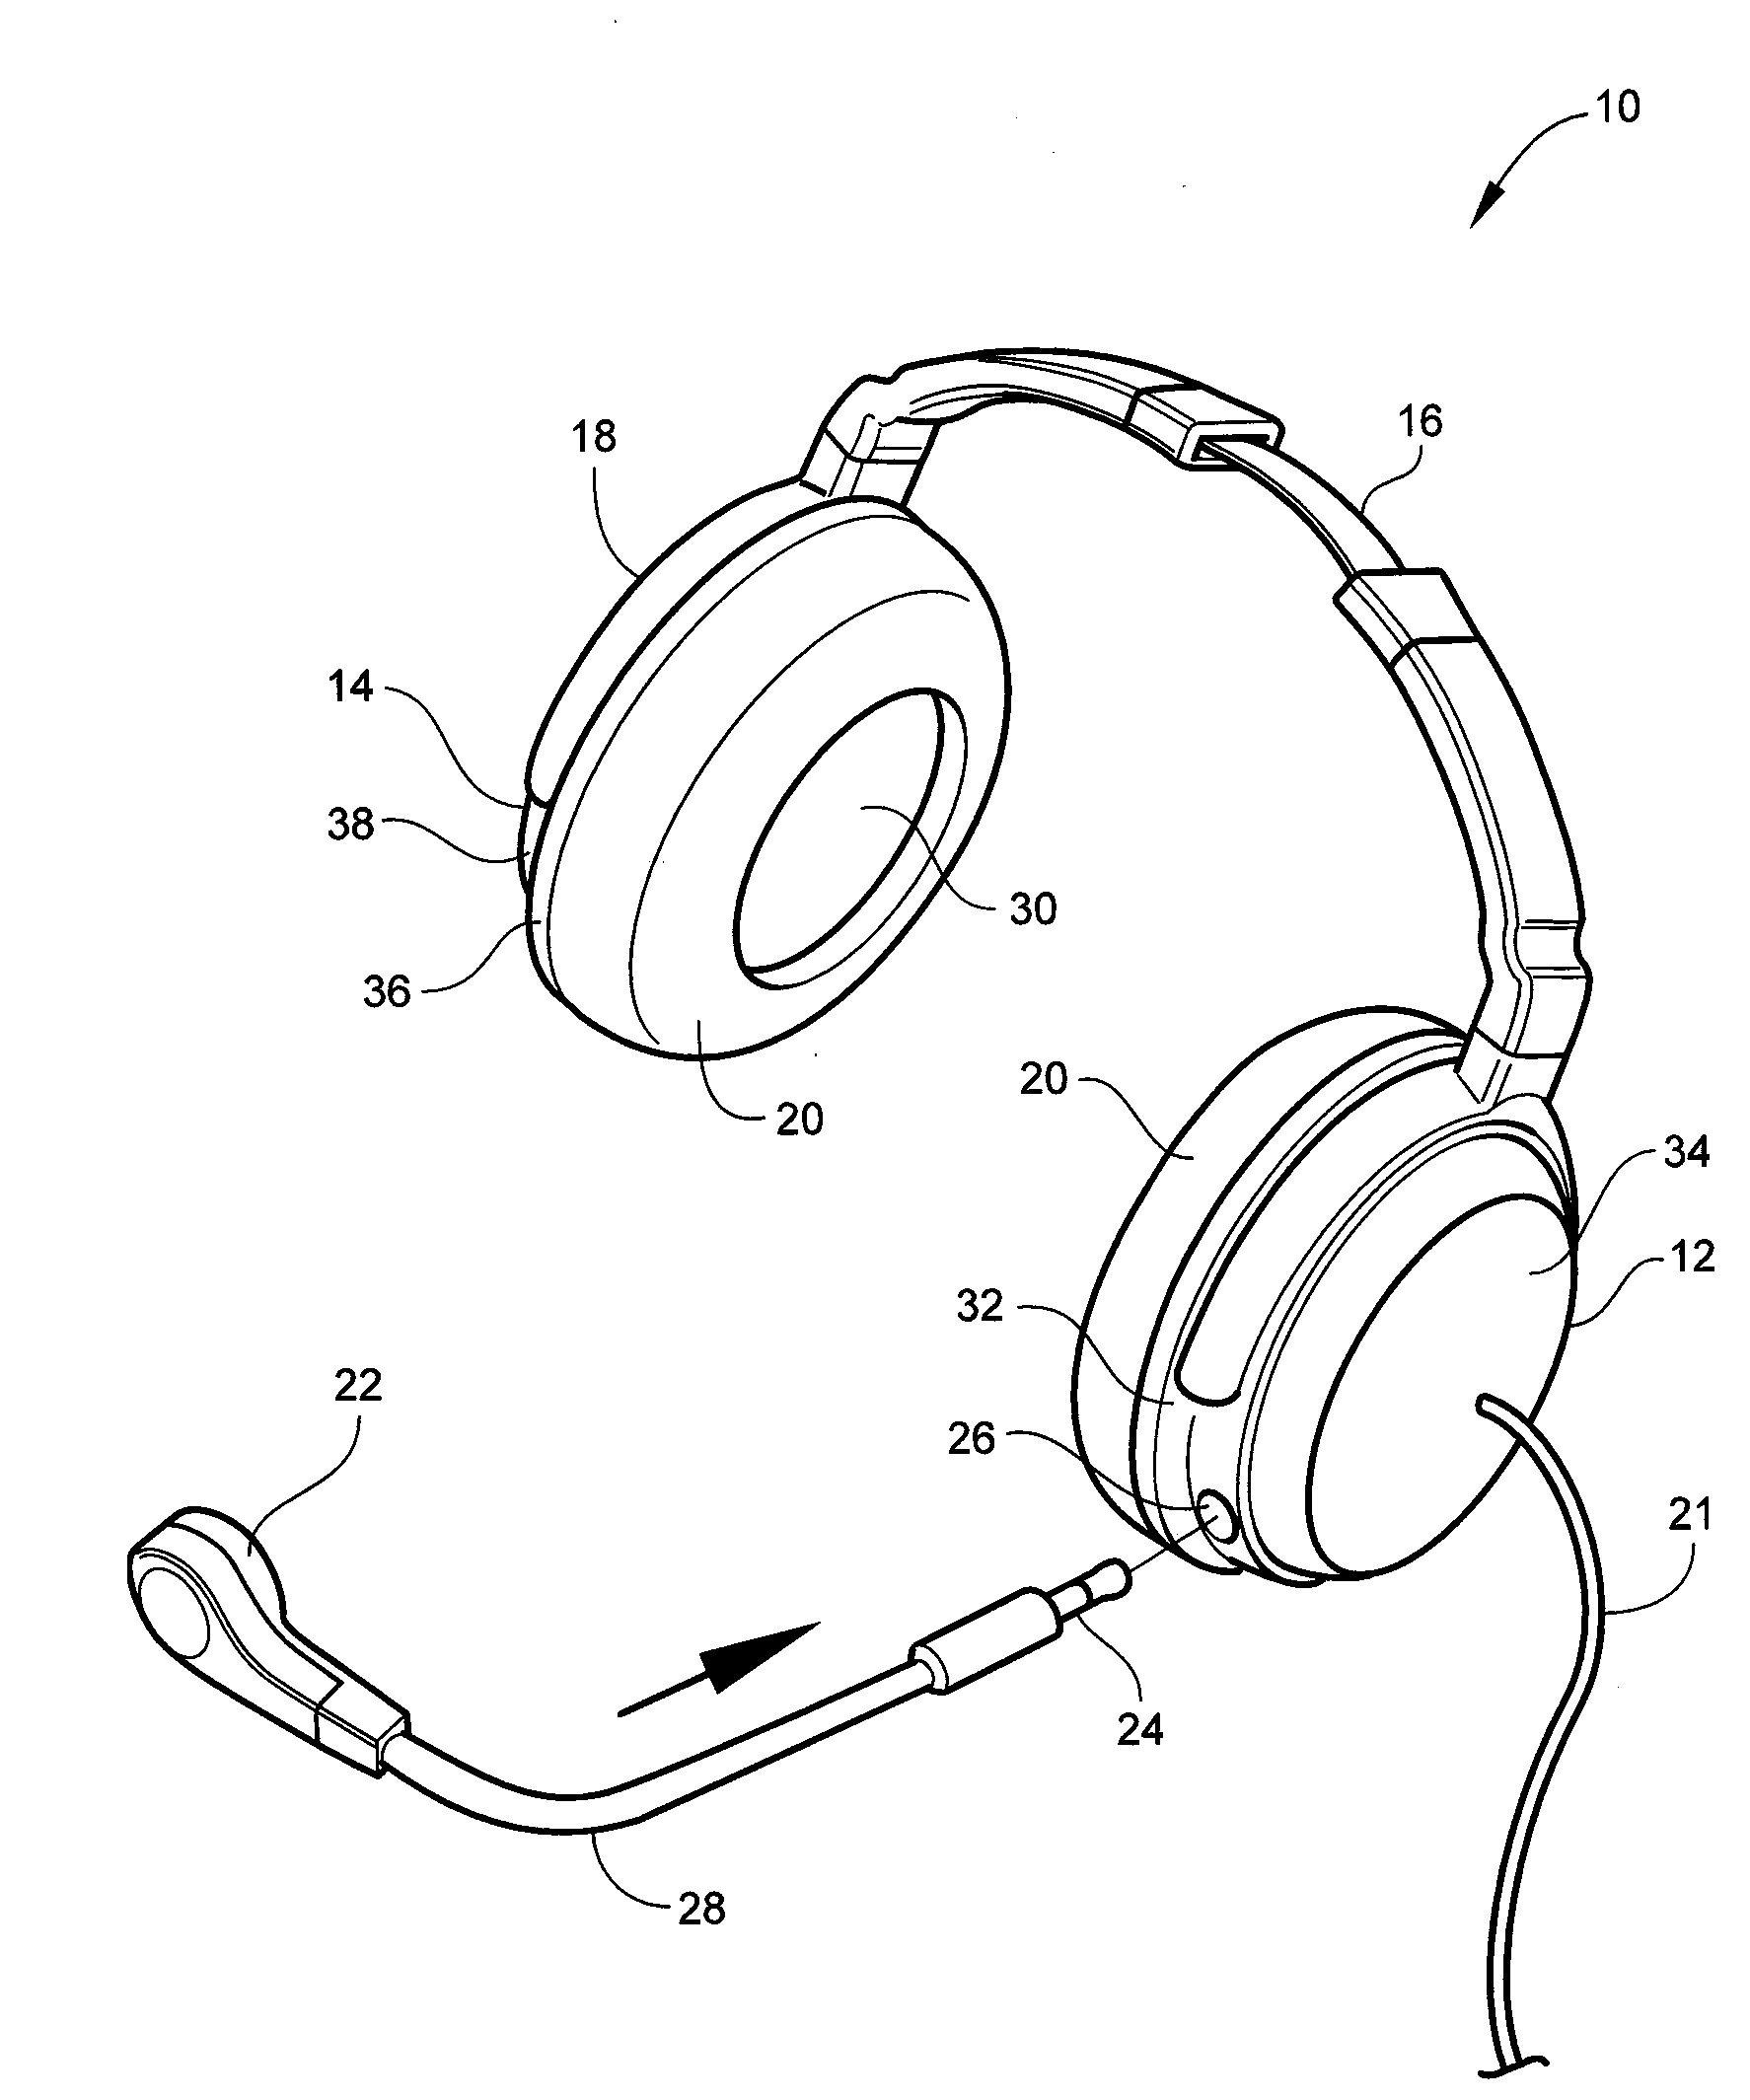 Headset device